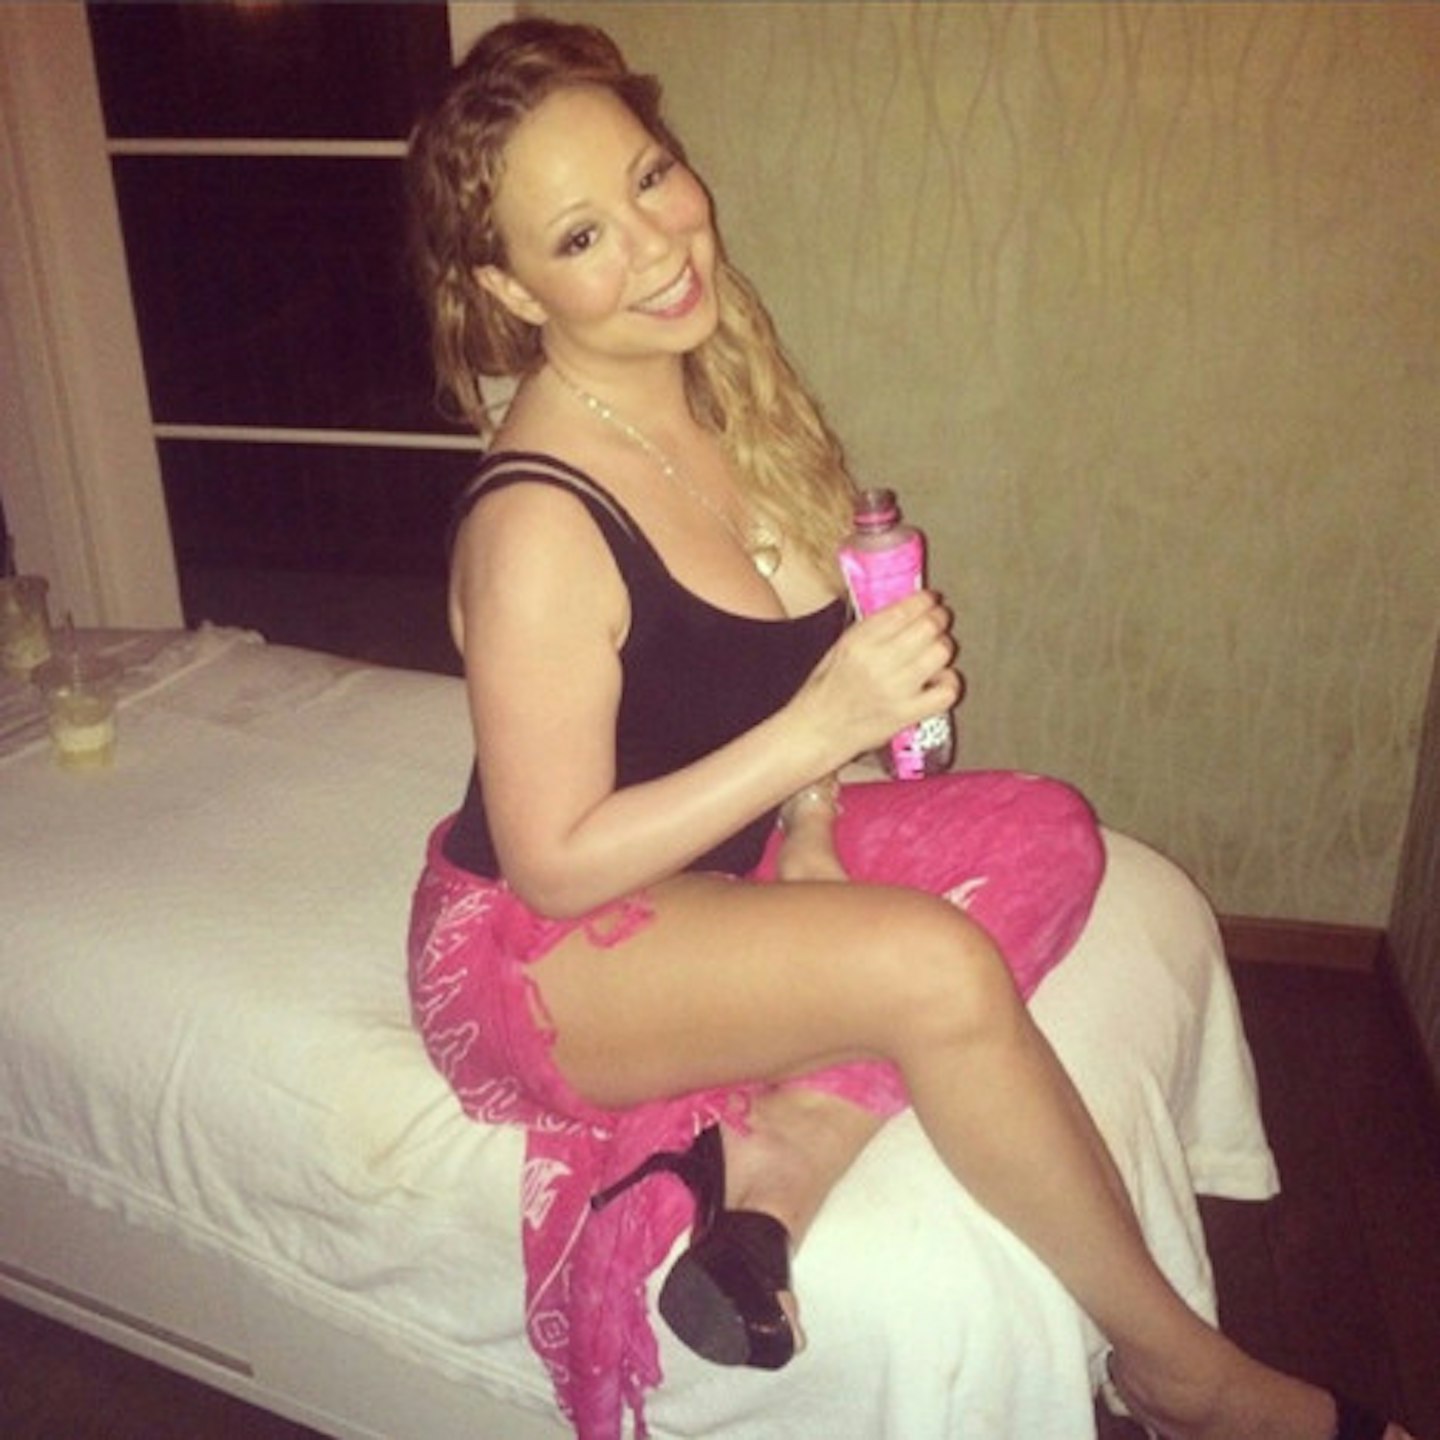 Mariah is said to be 'pretending the break-up isn't happening'